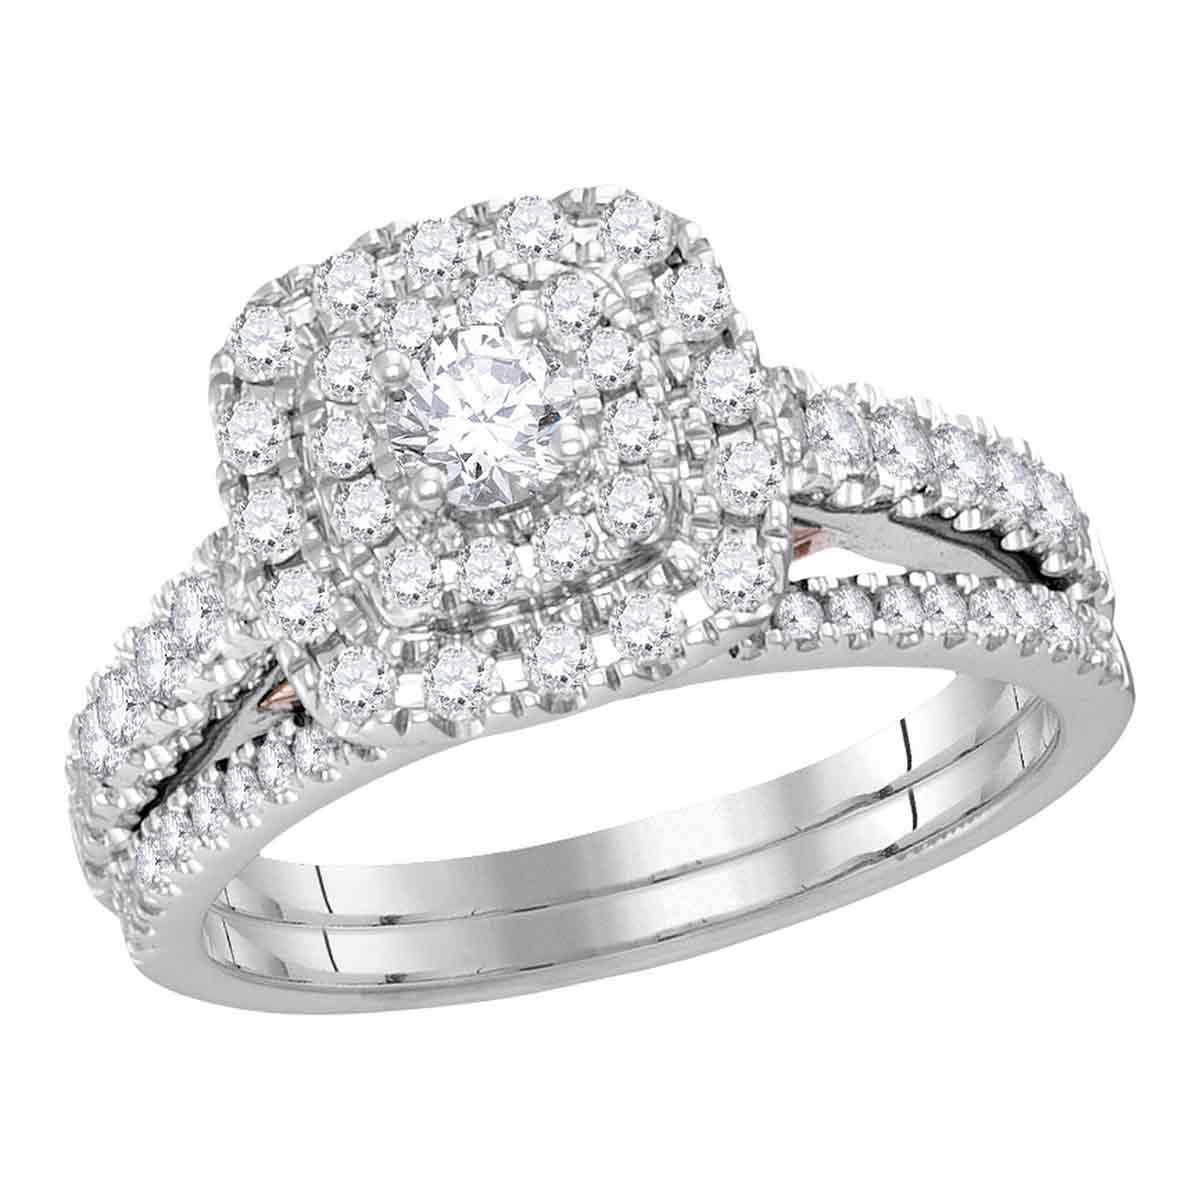 0.5ct diamond engagement ring in white gold | KLENOTA